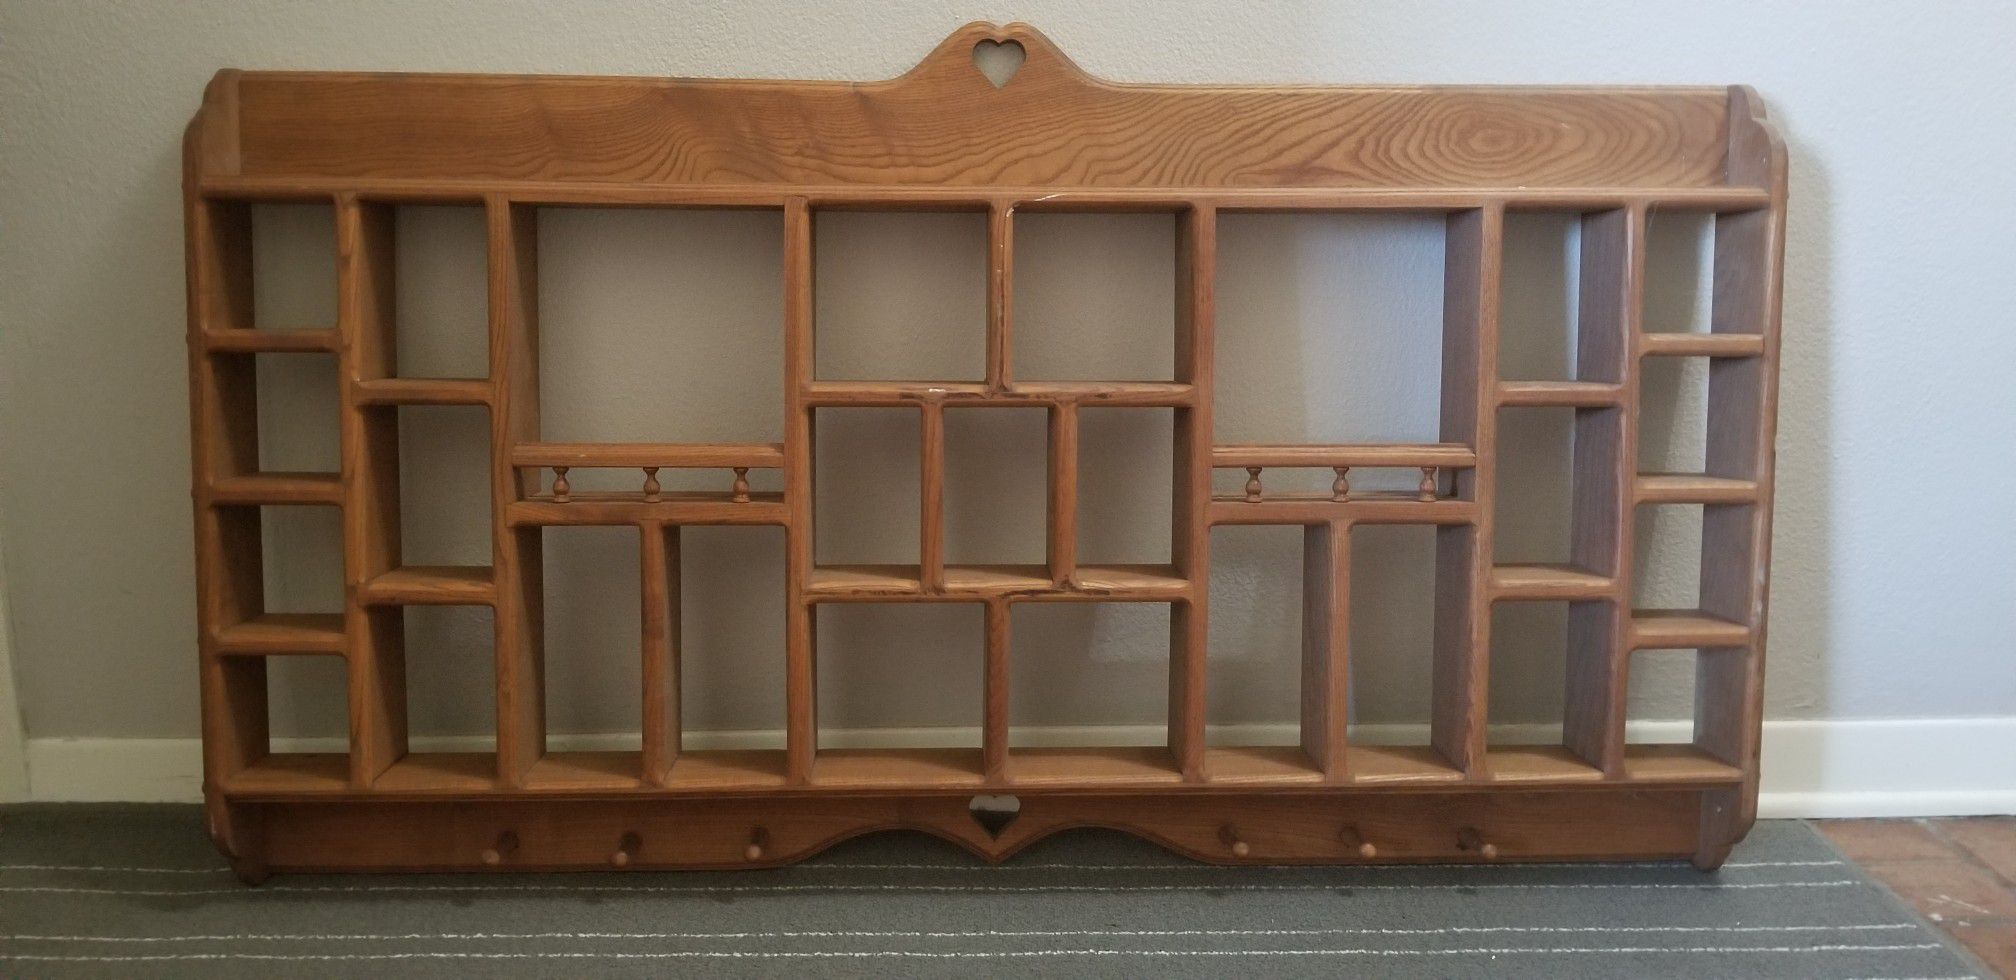 Solid wood essential oil shelf. Amish furniture